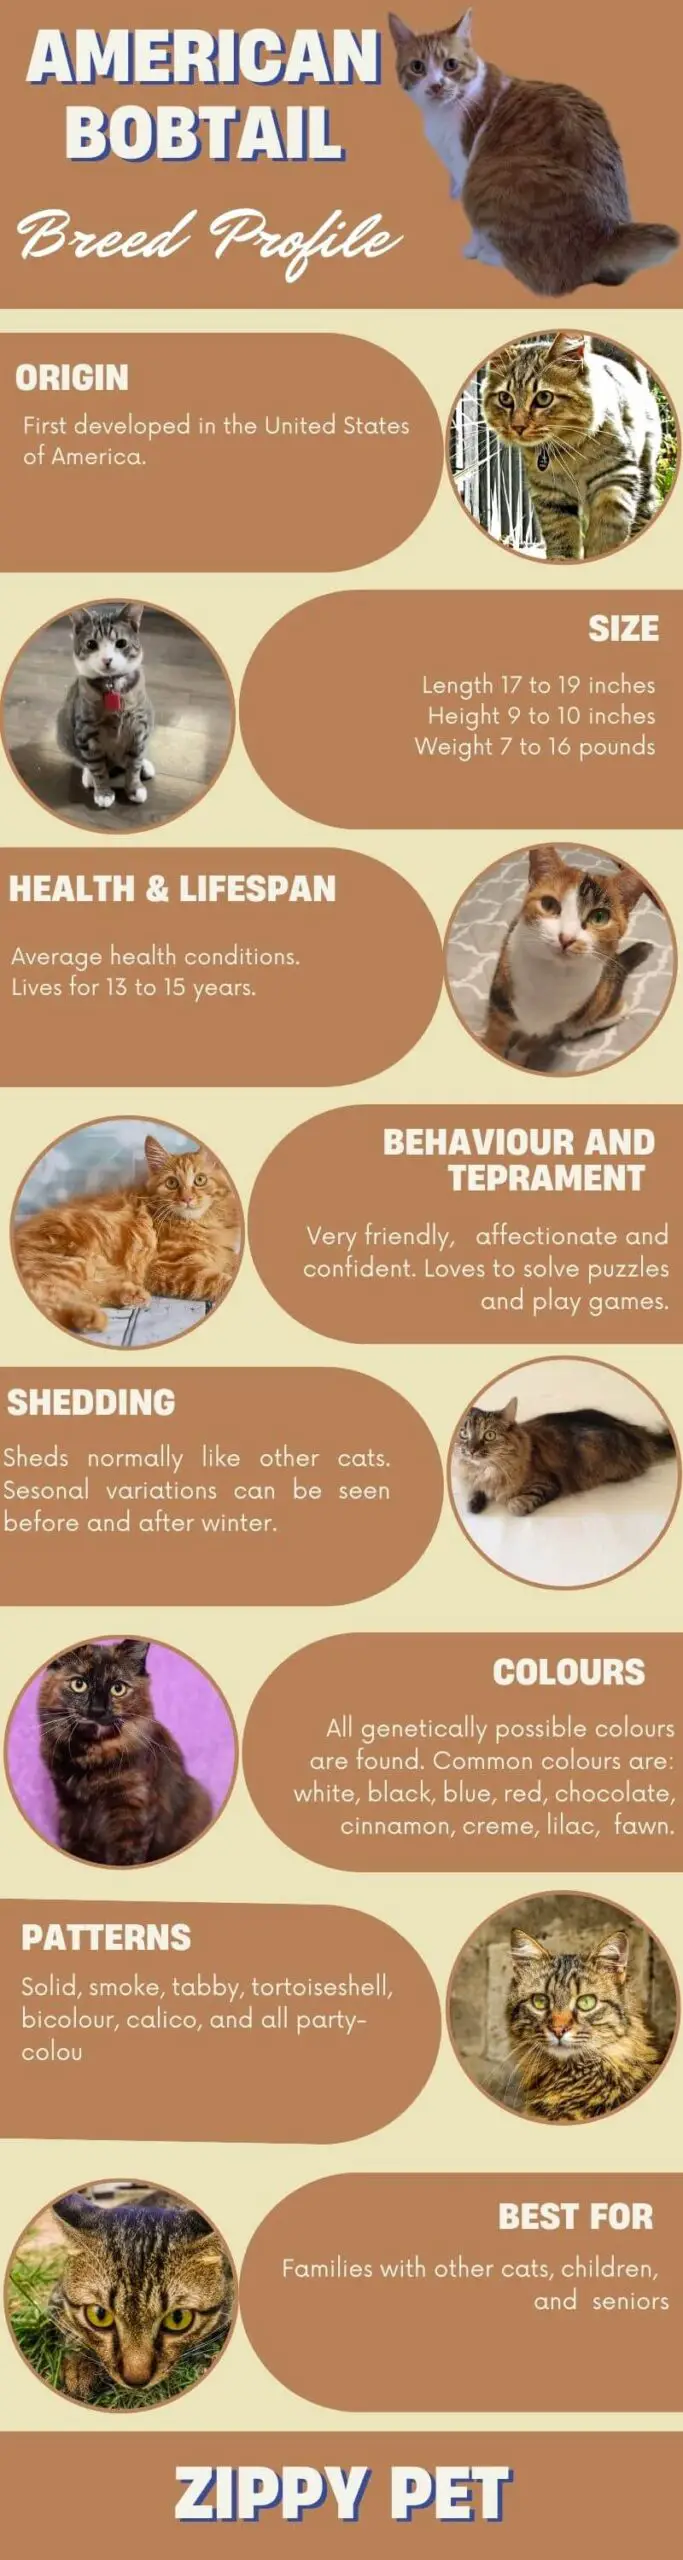 American Bobtail Cat Infographic